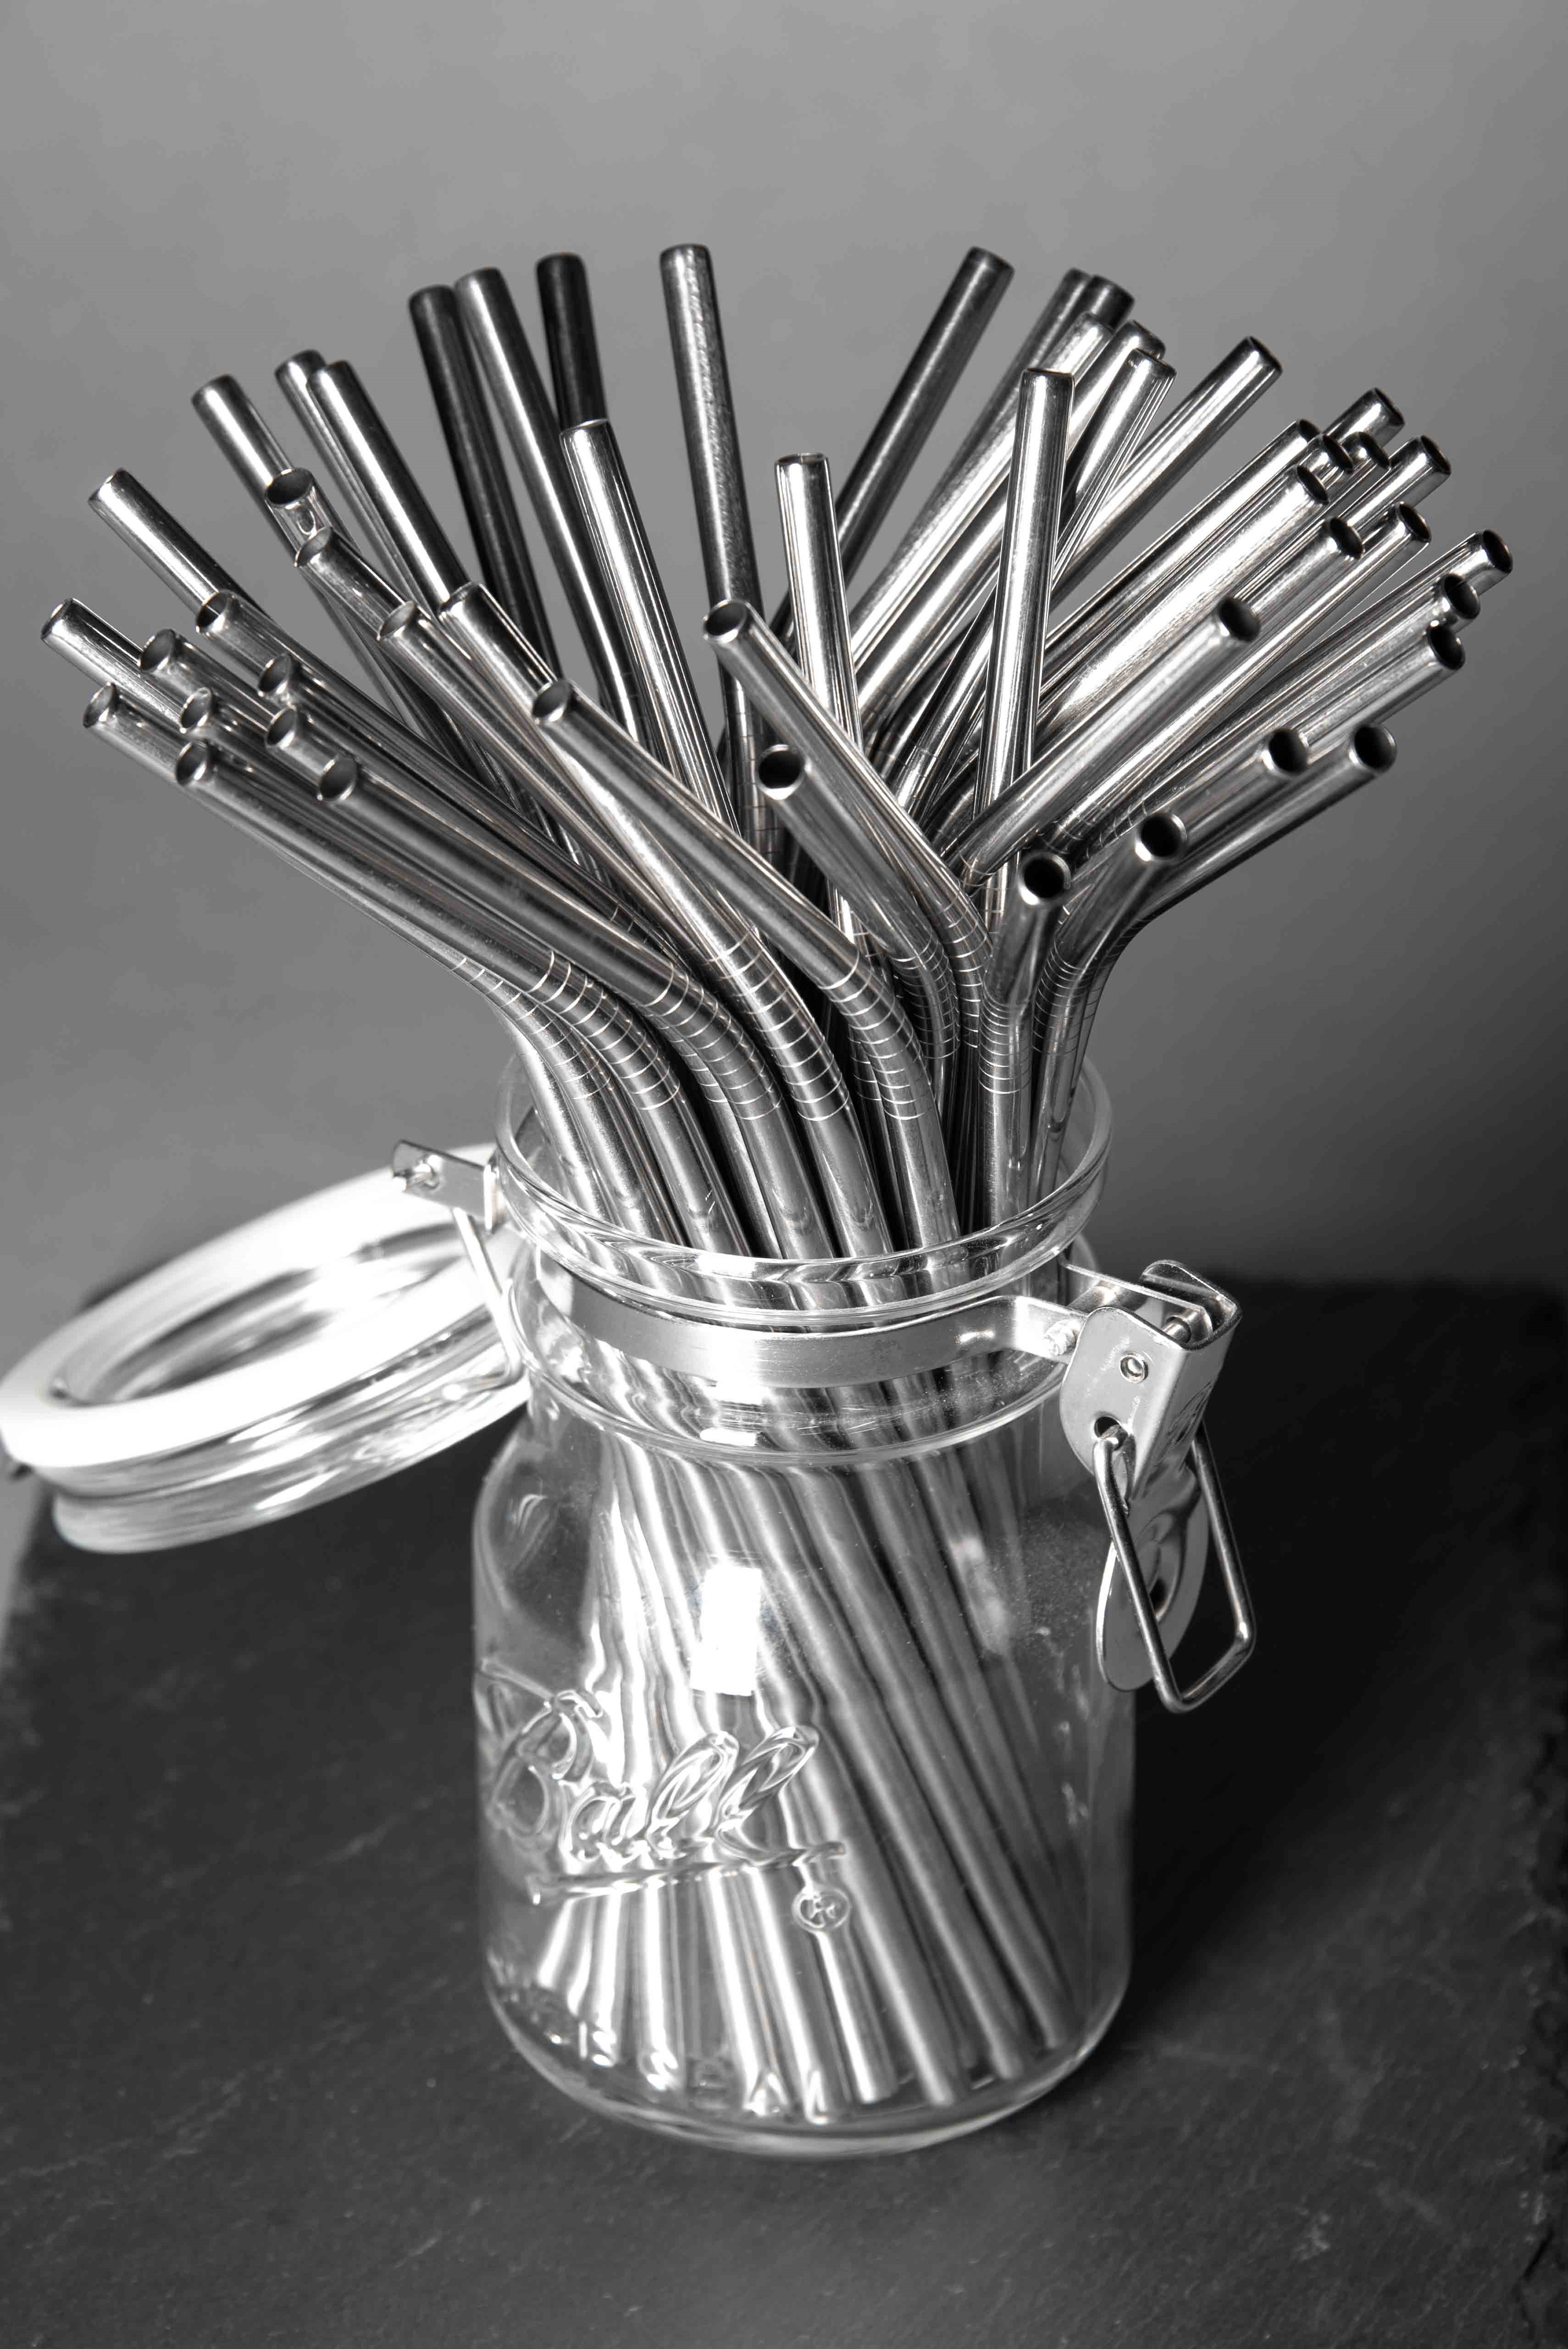 Wholesale aluminum straws for Bars and Restaurants 